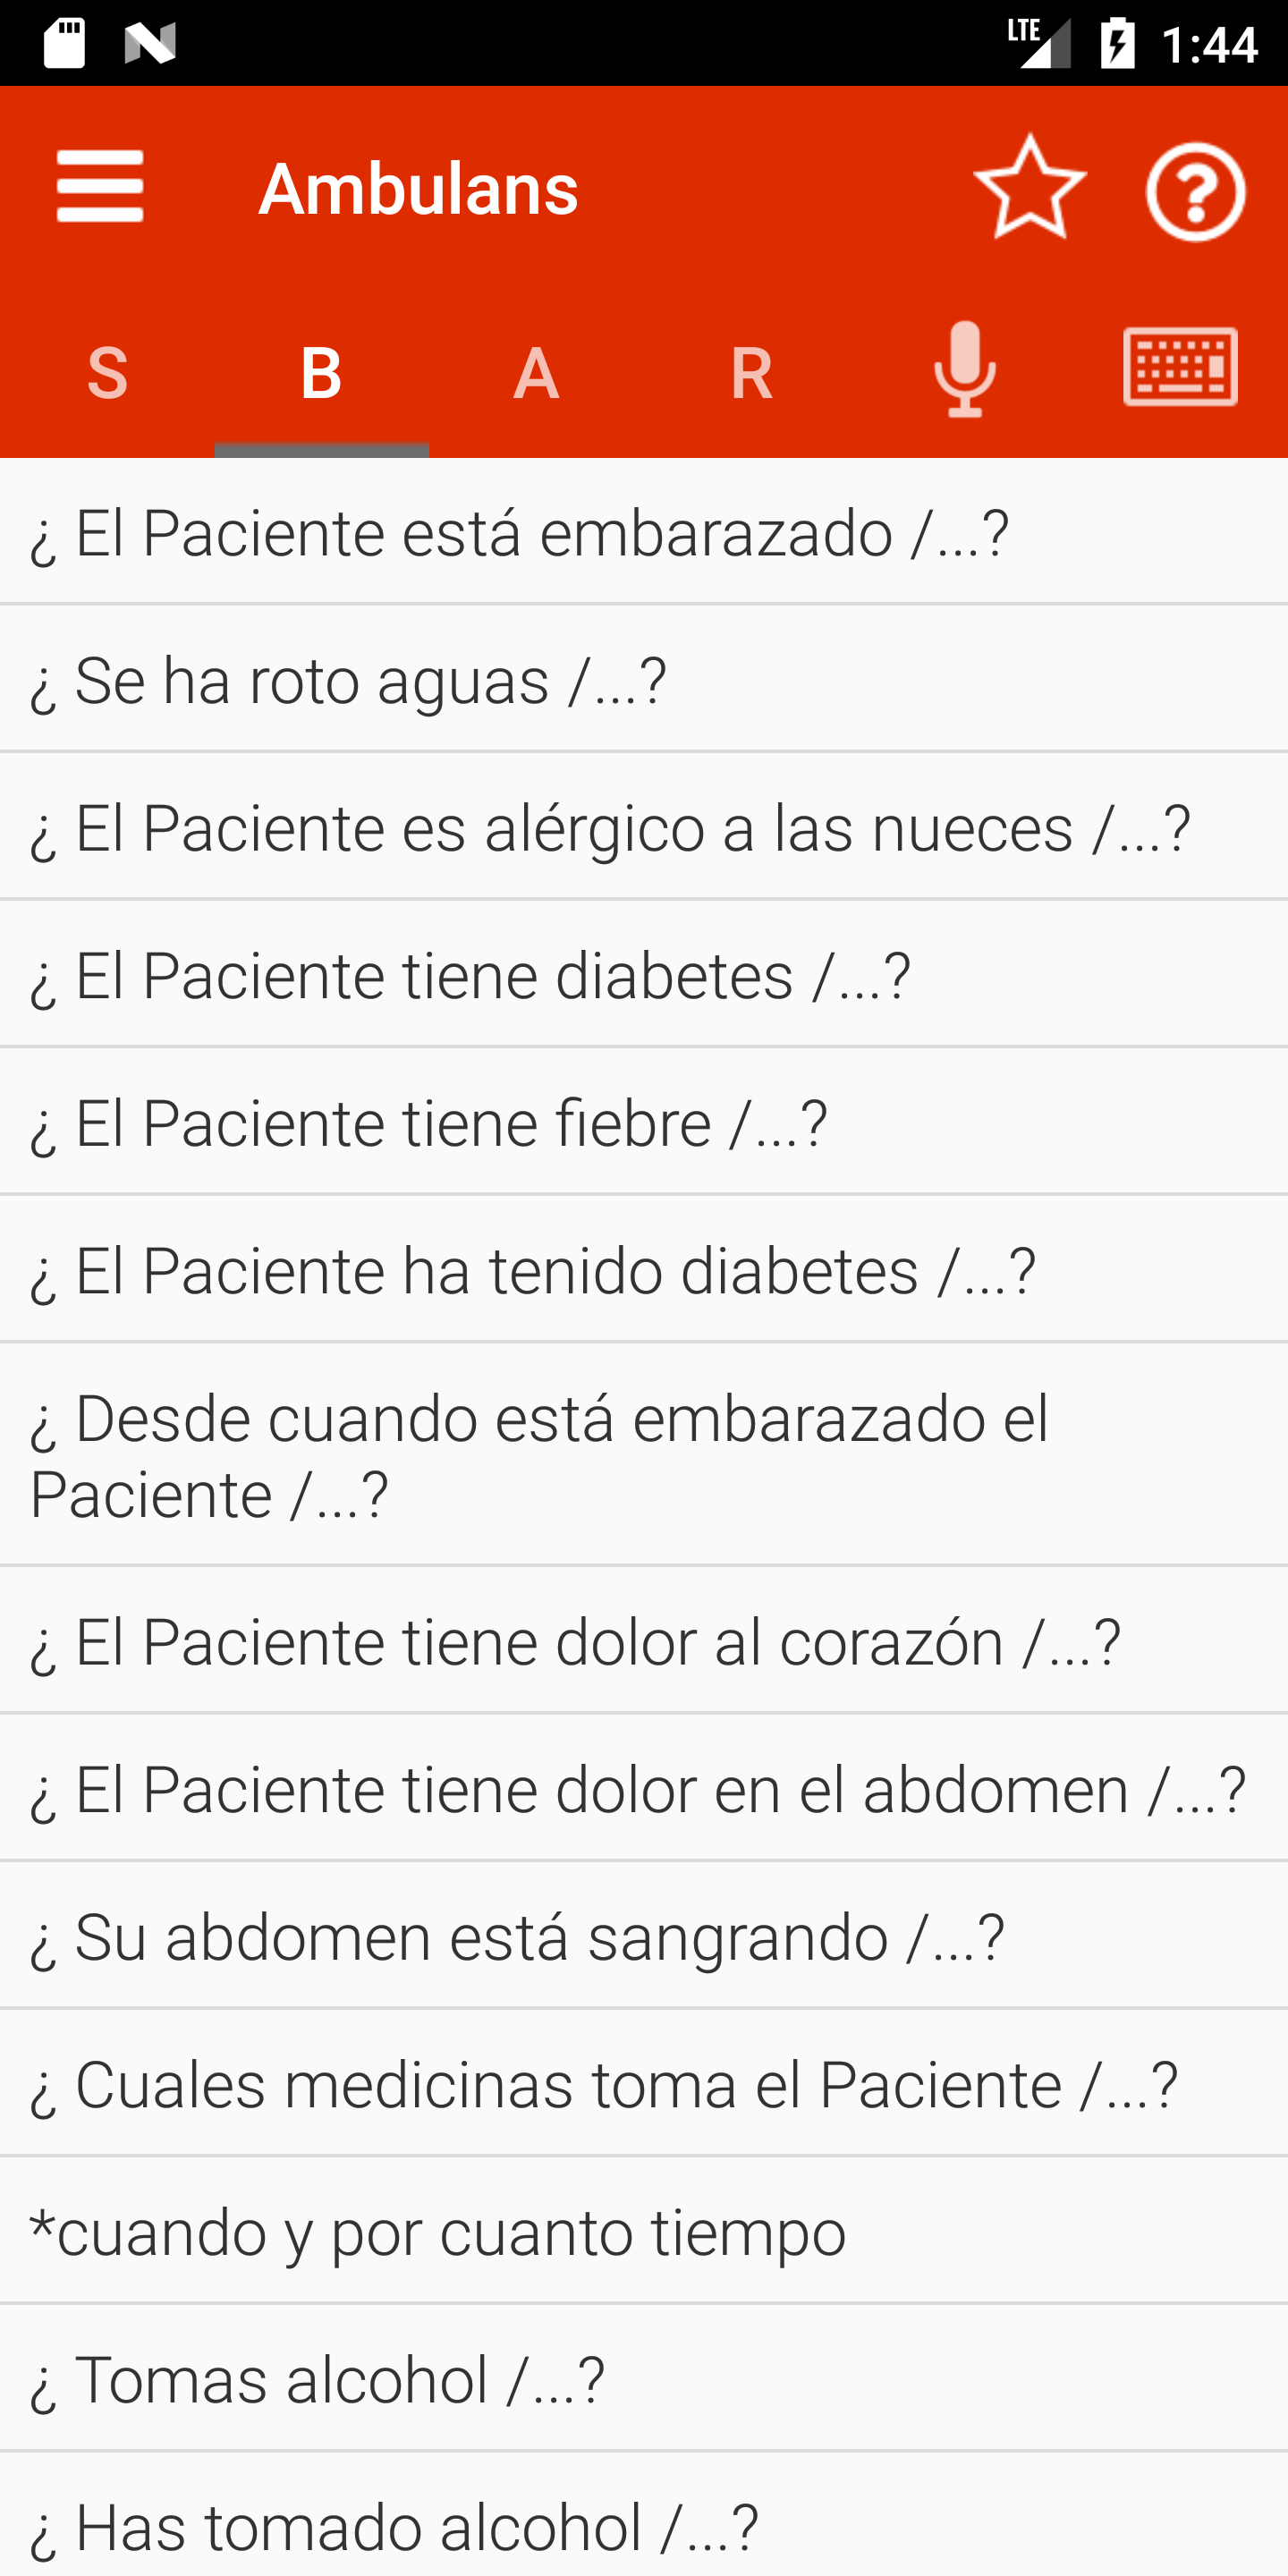 Ambulance app: B menu in Spanish